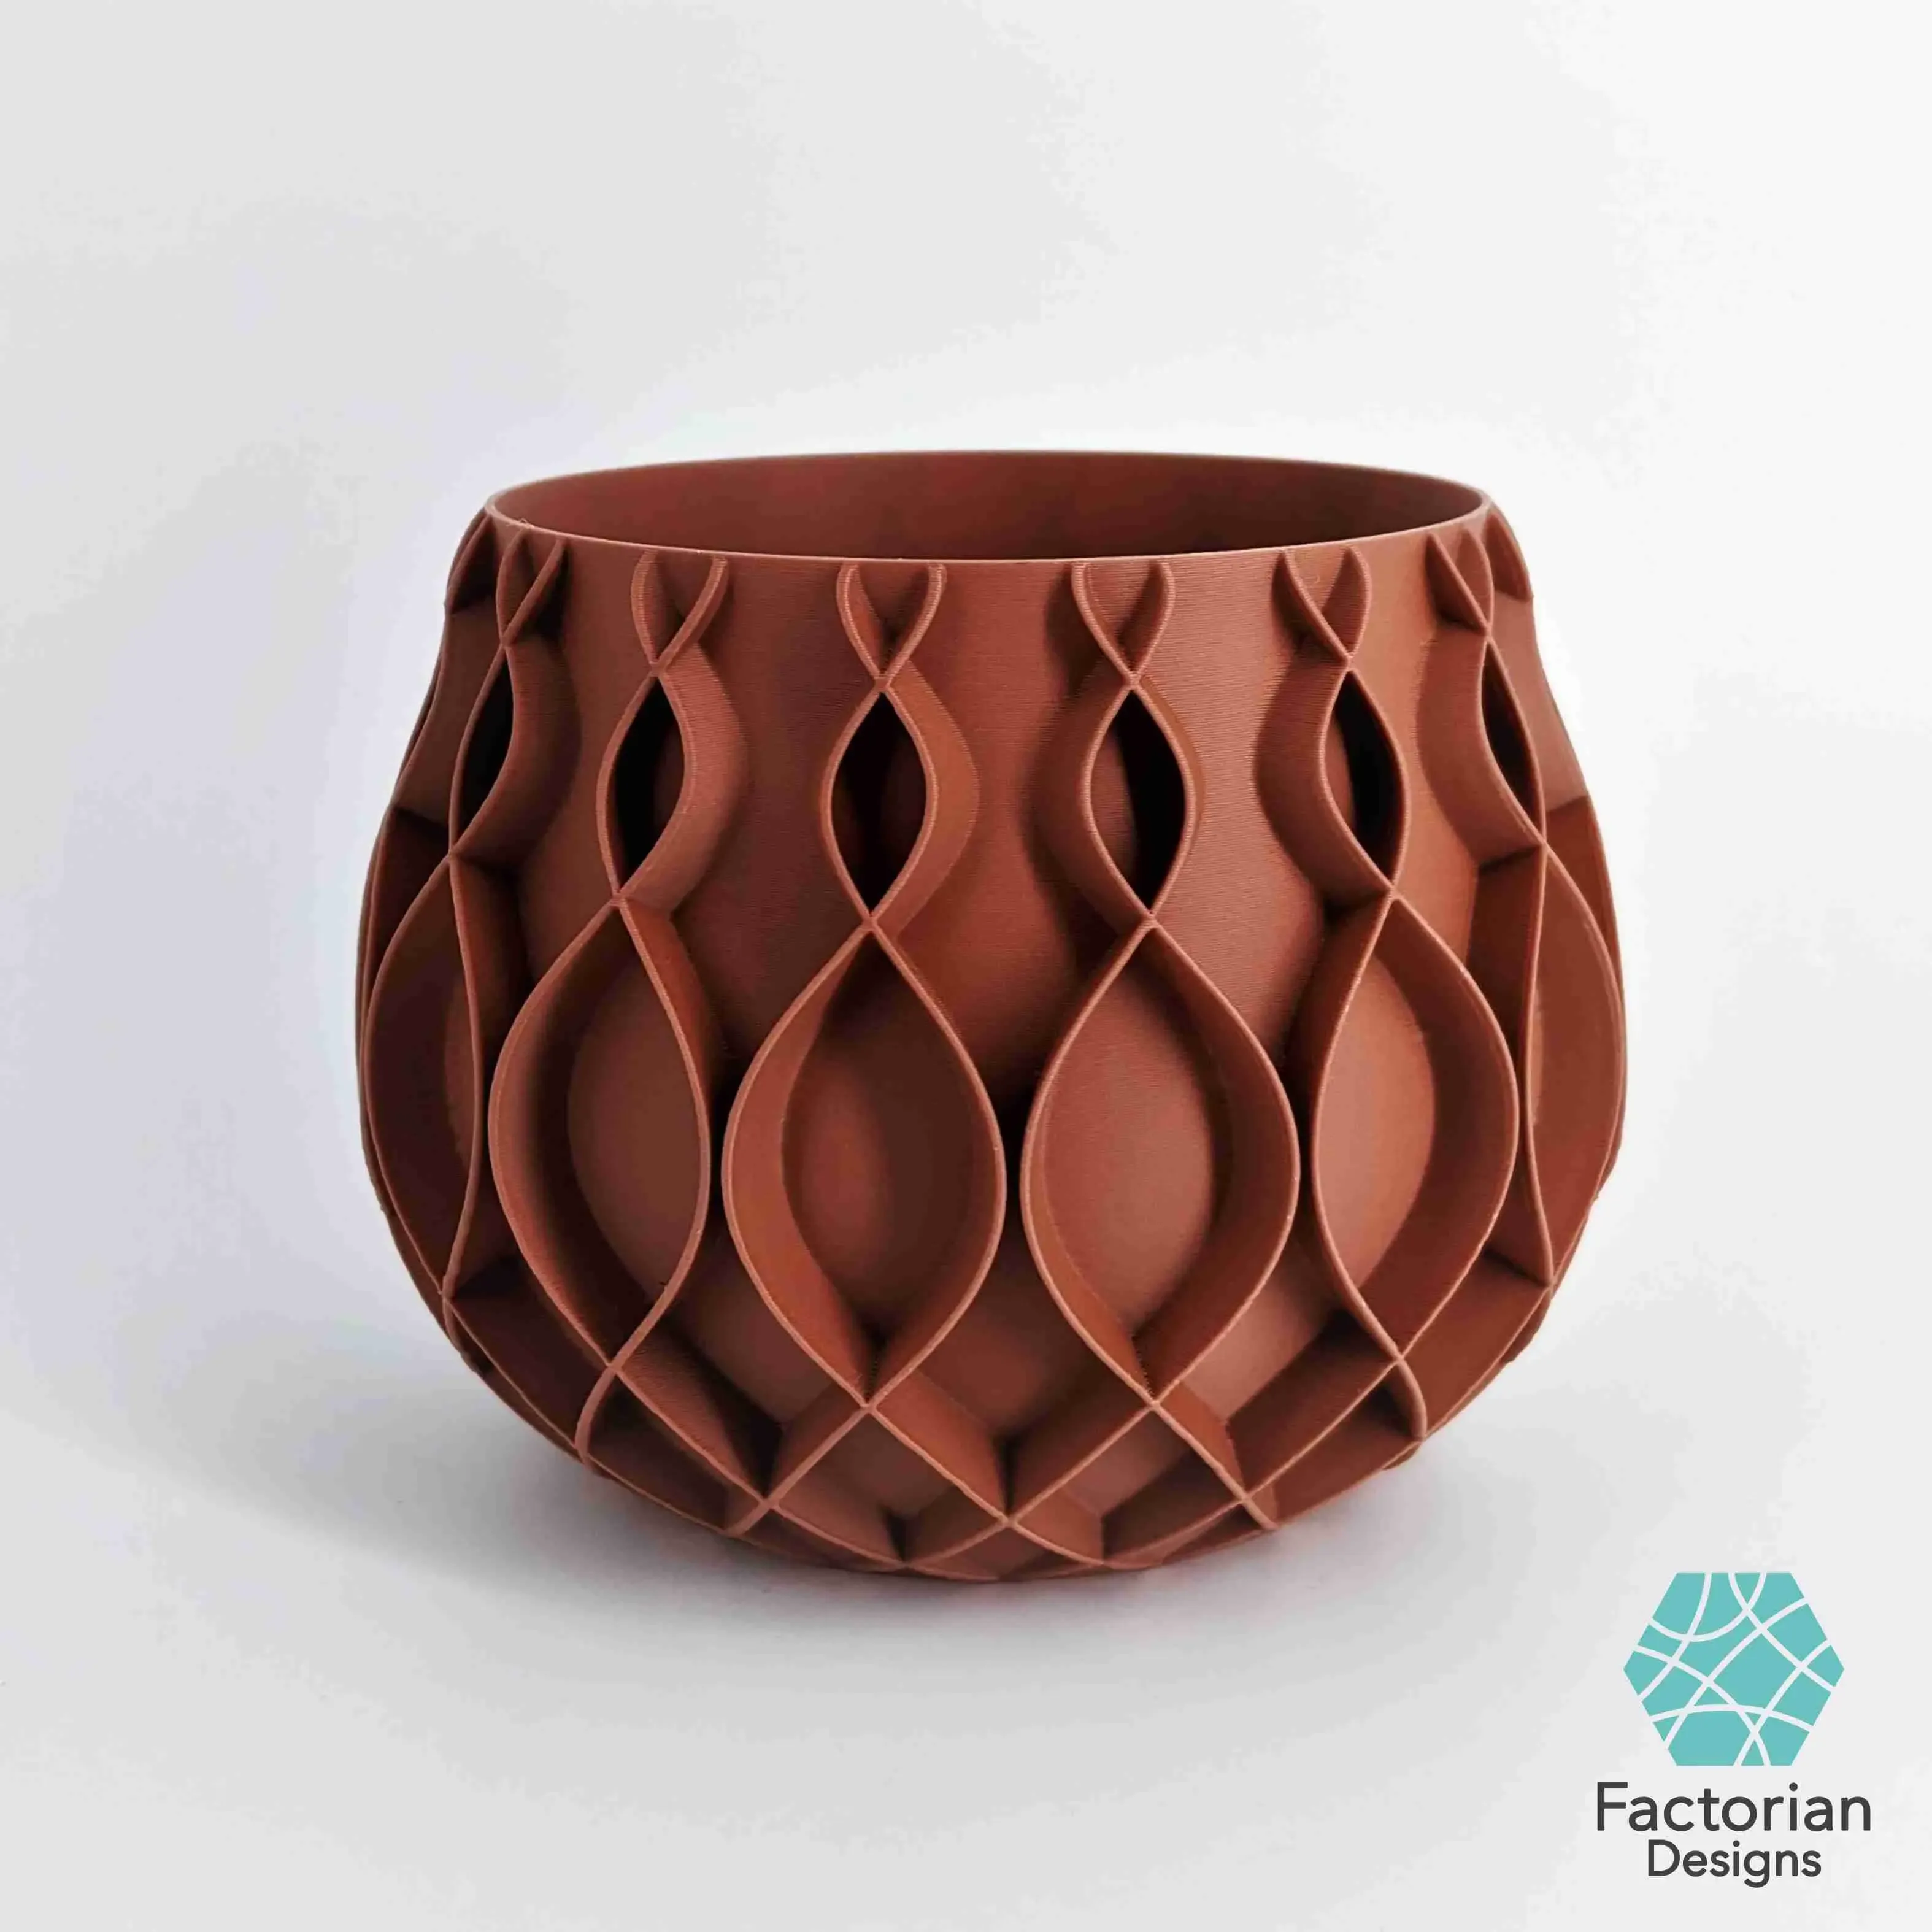 Plant Pot "Bellvere" | Planter + Drain Tray STL to 3D print